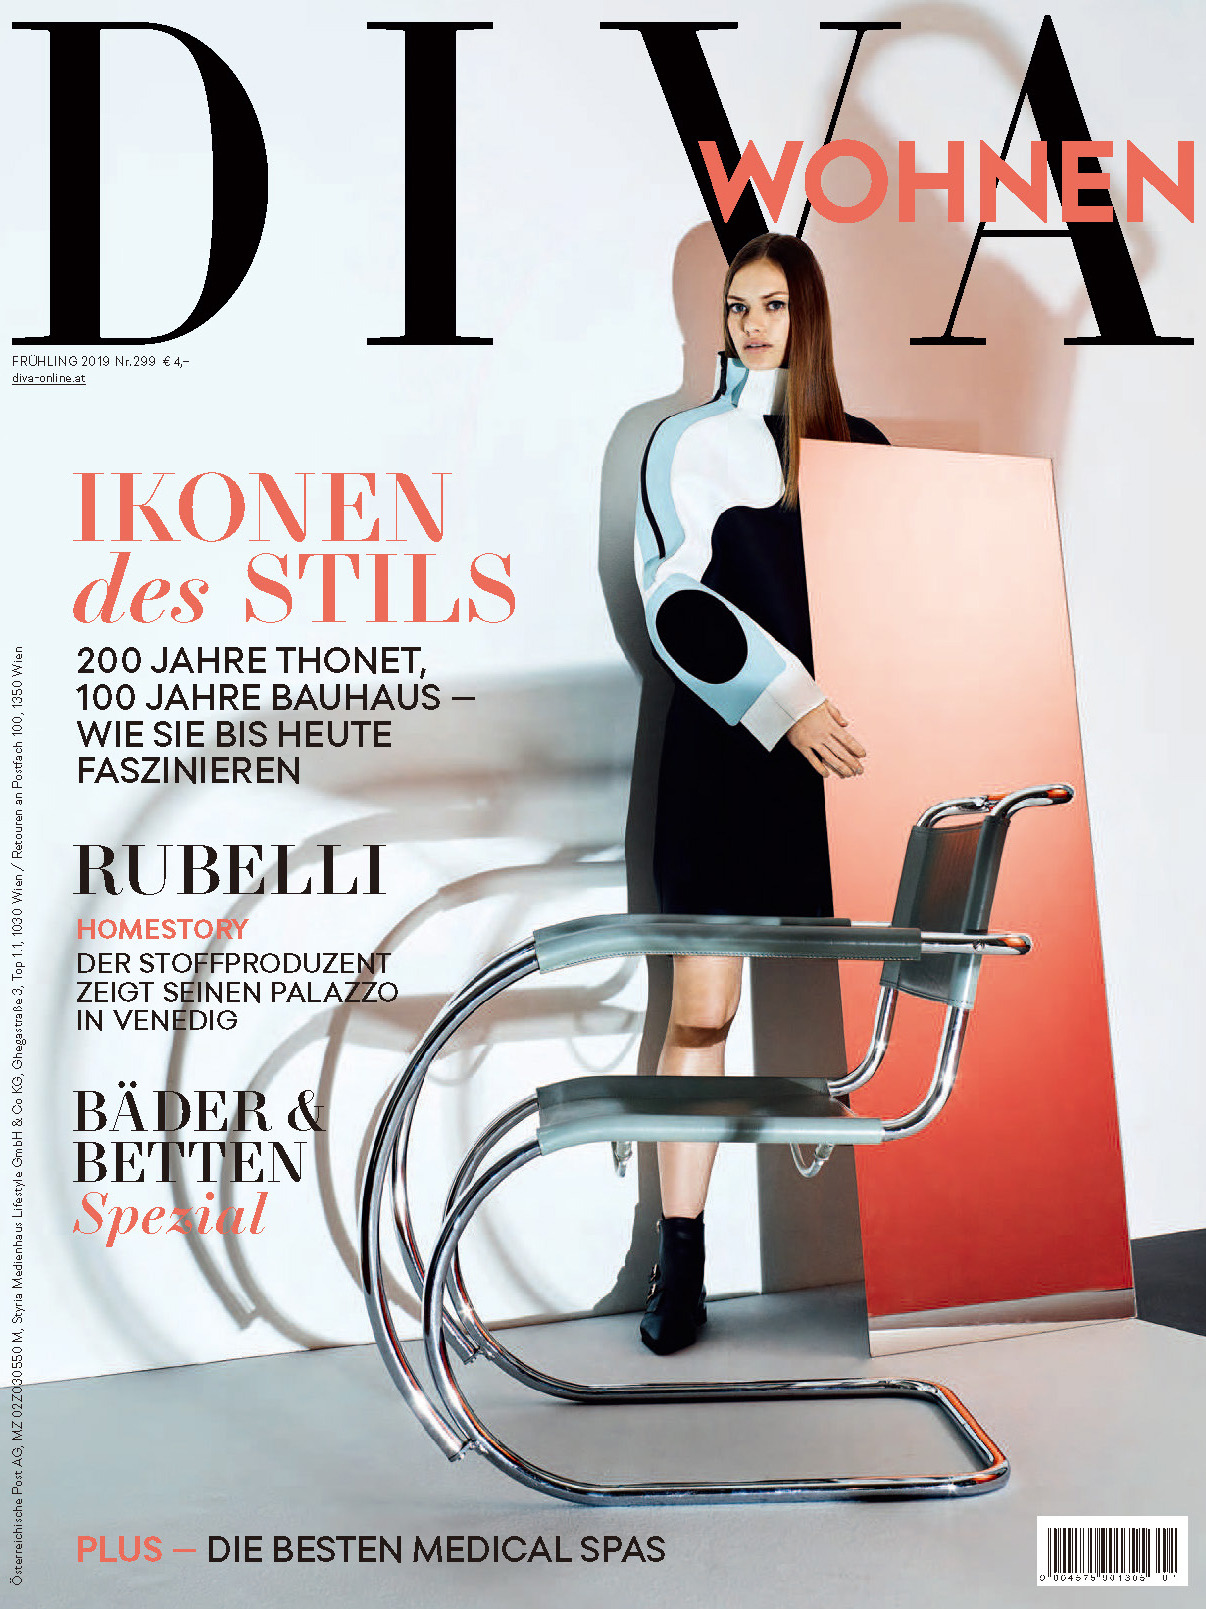 《Diva Wohnen》奥地利版时尚家居杂志2019年春季号